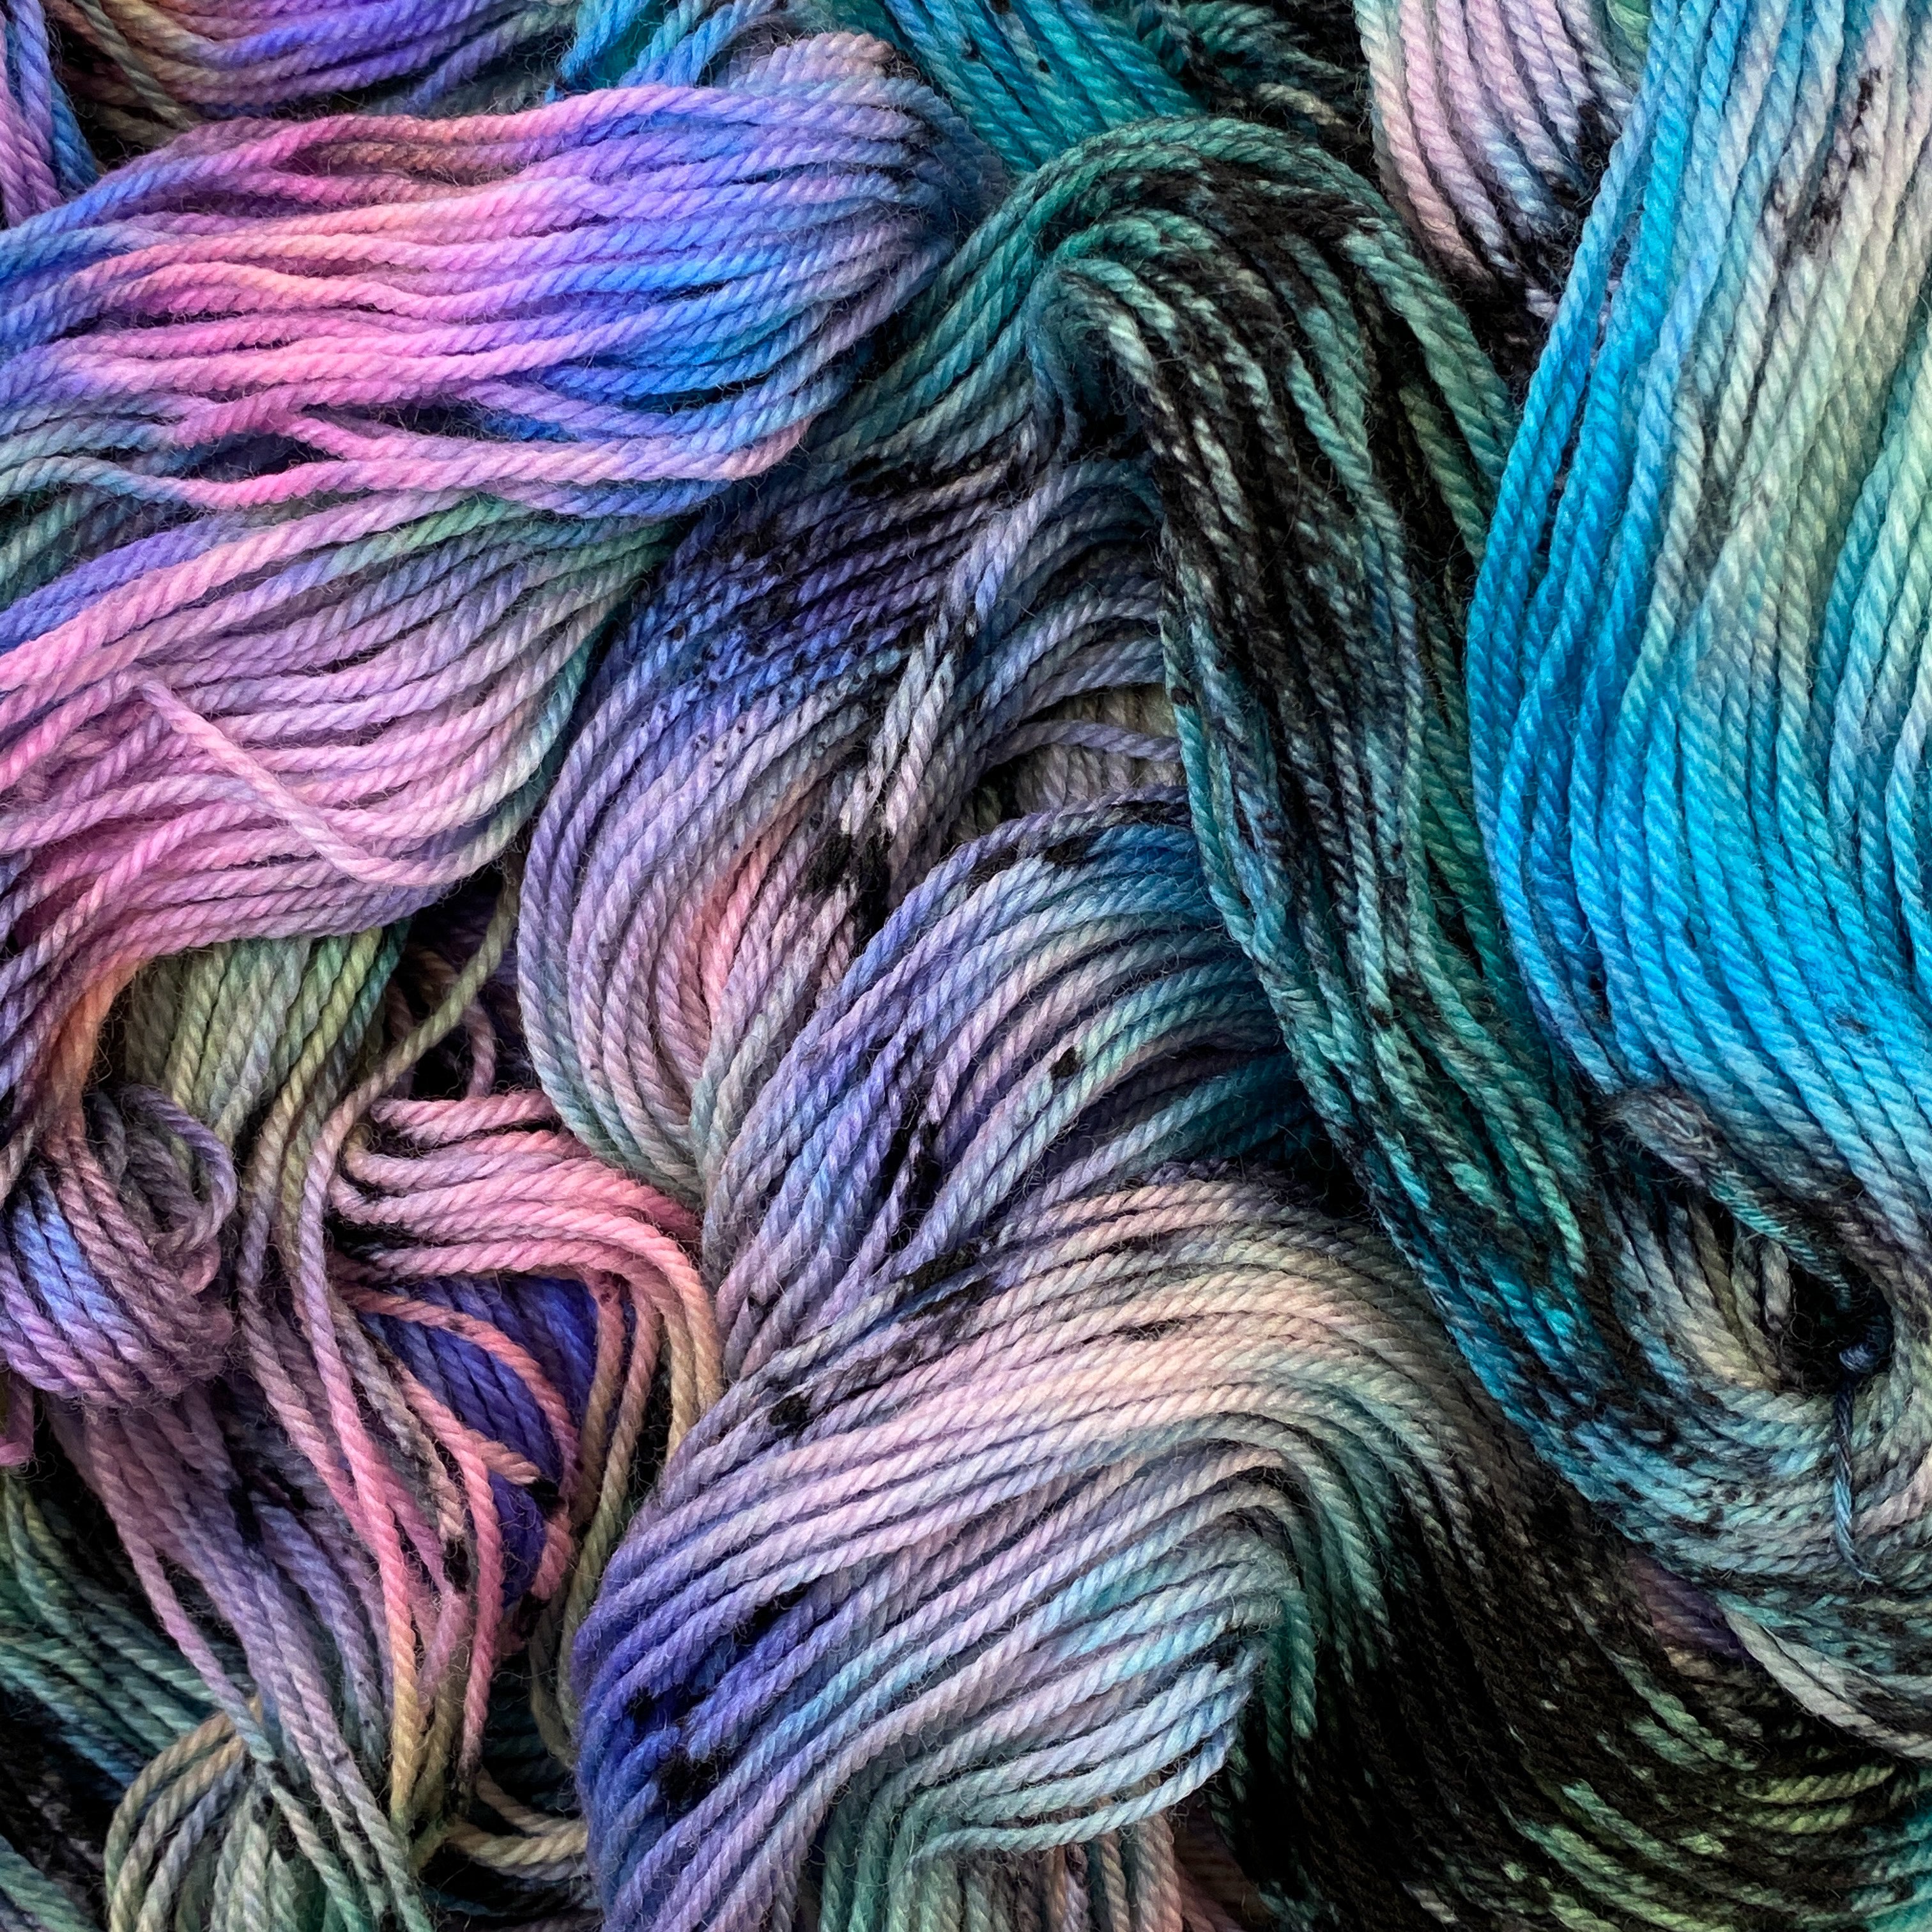 Hypercolored